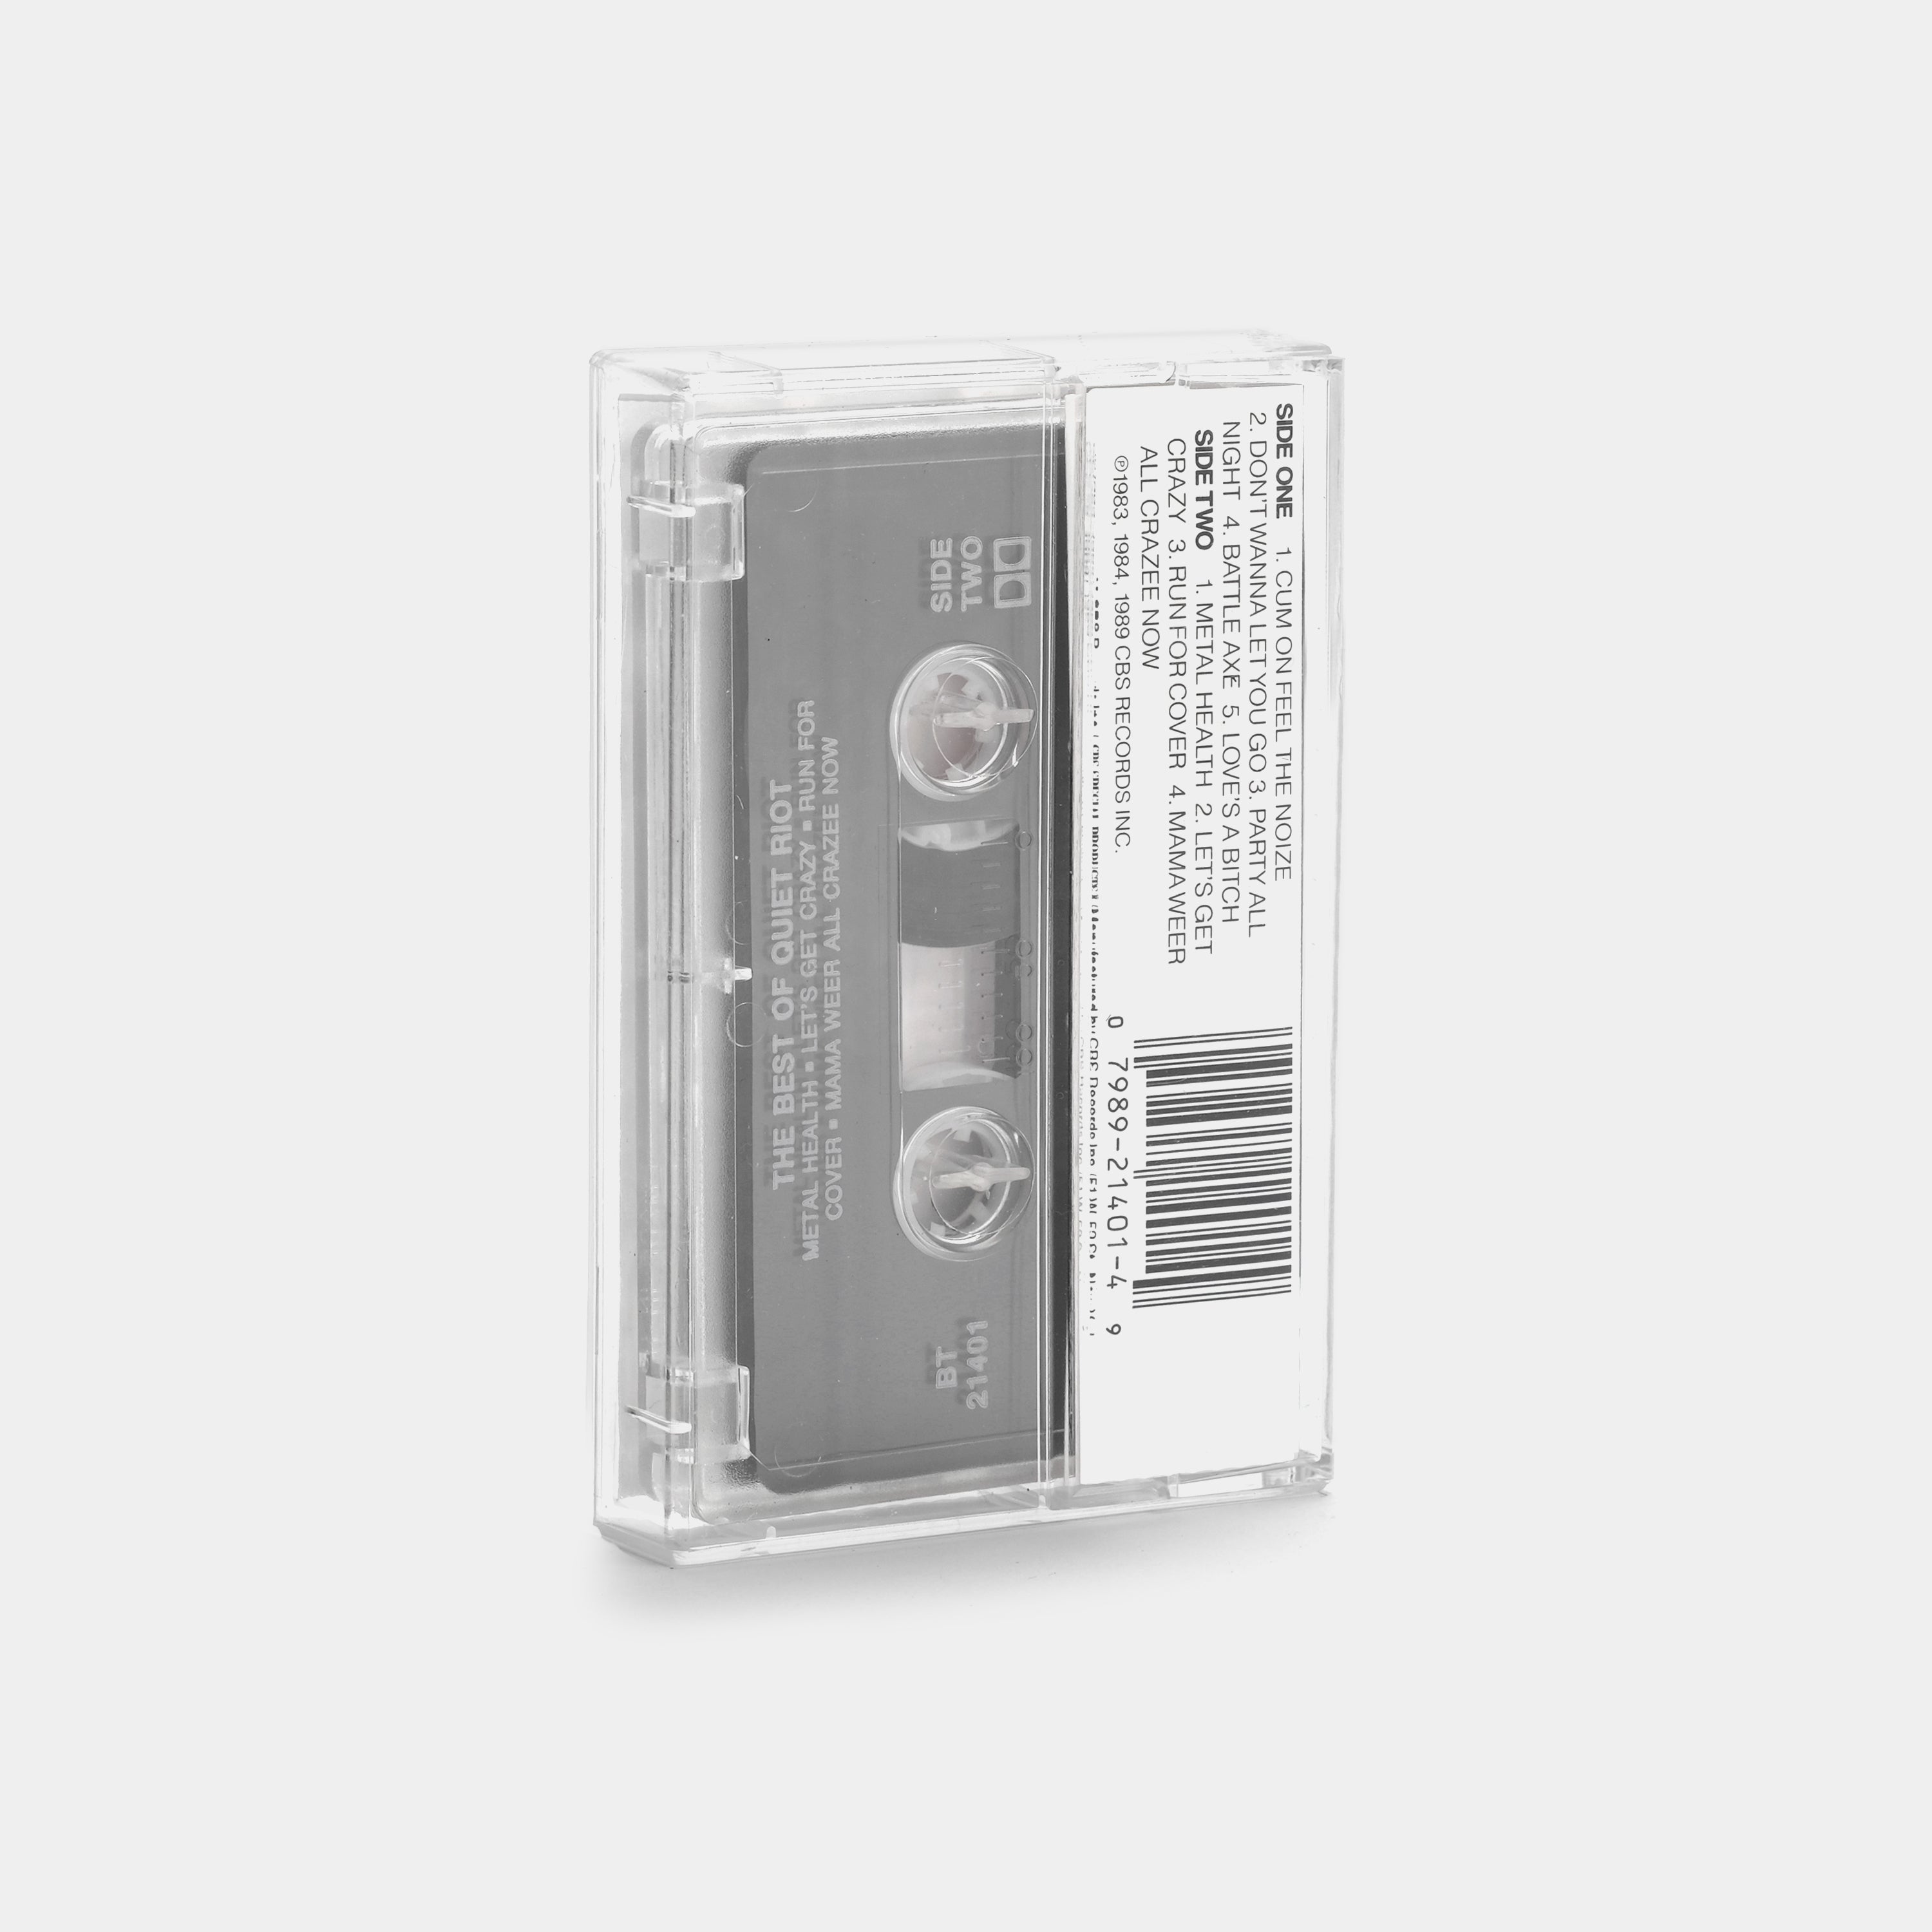 Quiet Riot - The Best Of Quiet Riot Cassette Tape